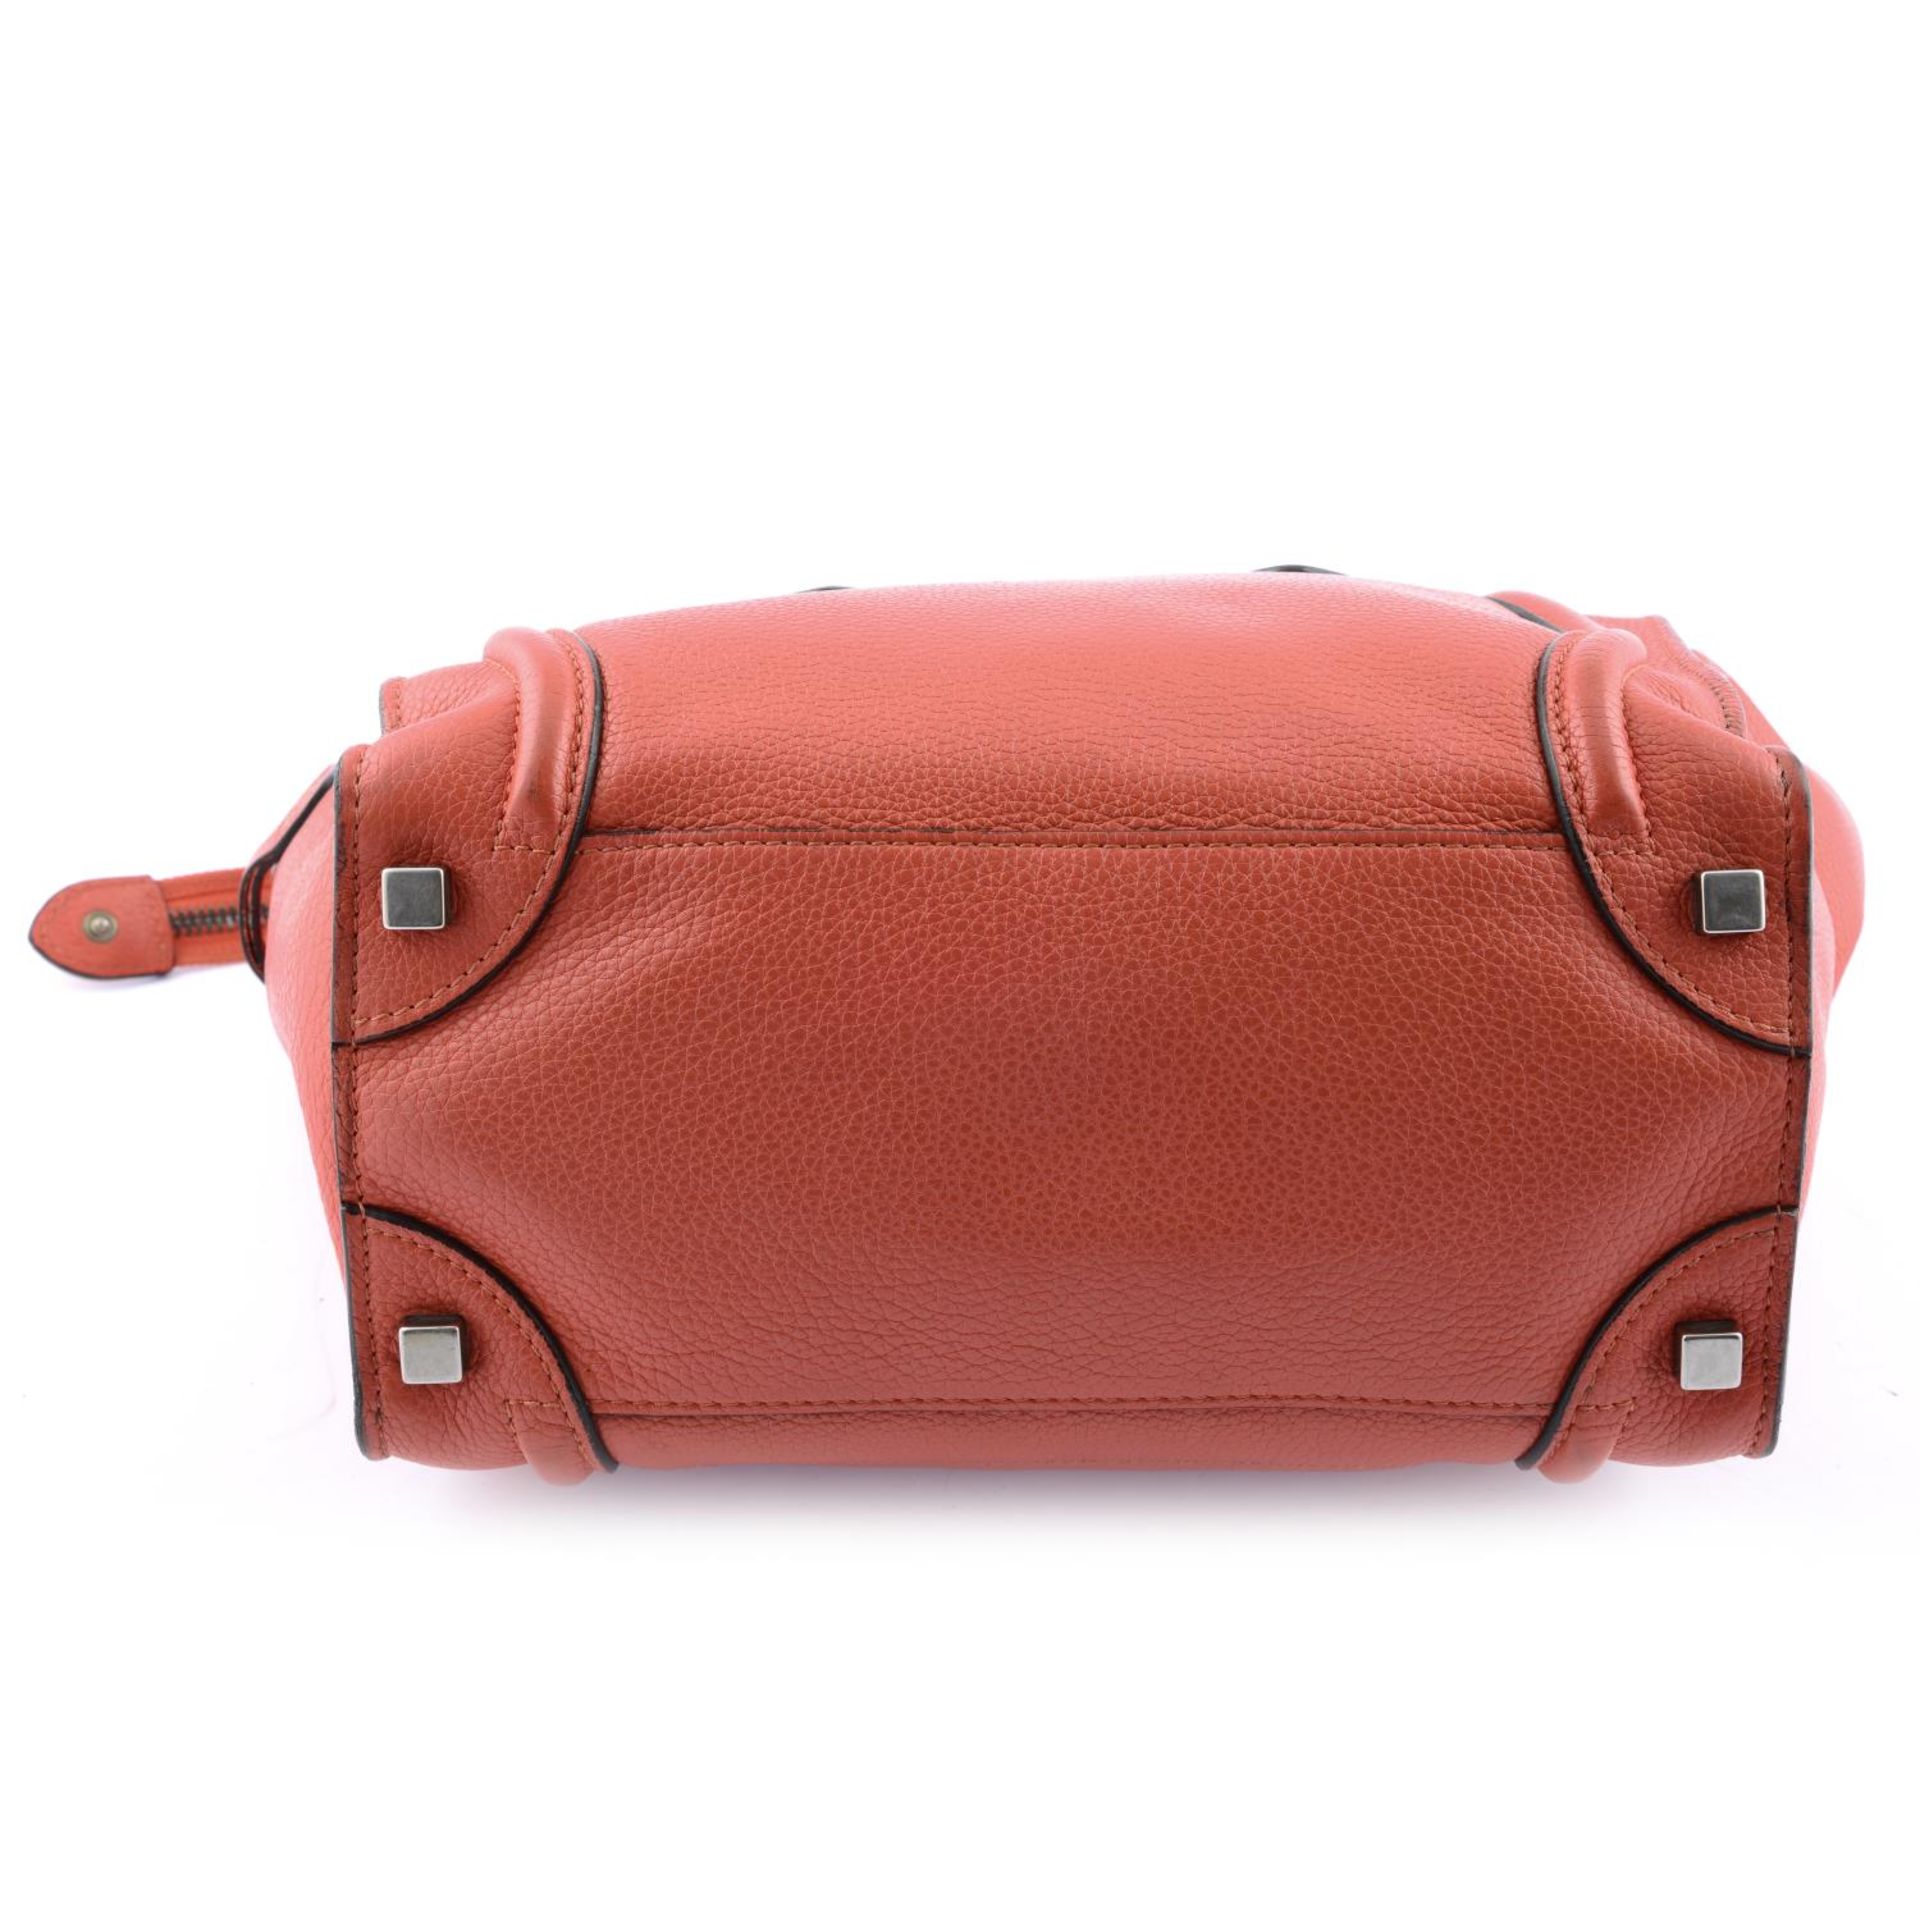 CÉLINE - a Micro Luggage Tote handbag. - Bild 4 aus 4